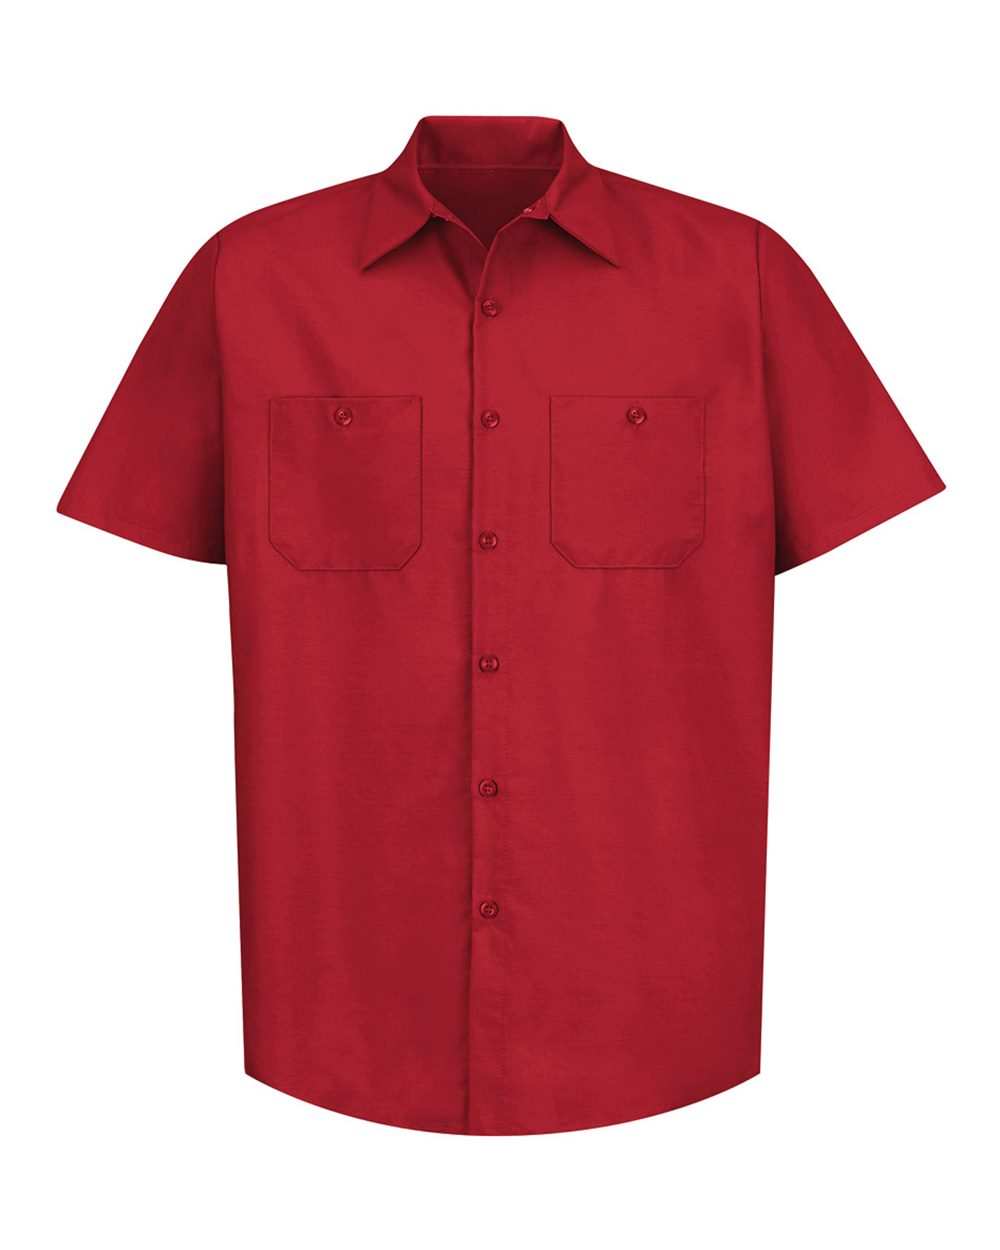 Red Kap® Men's Short Sleeve Industrial Work Shirt - image 3 of 3